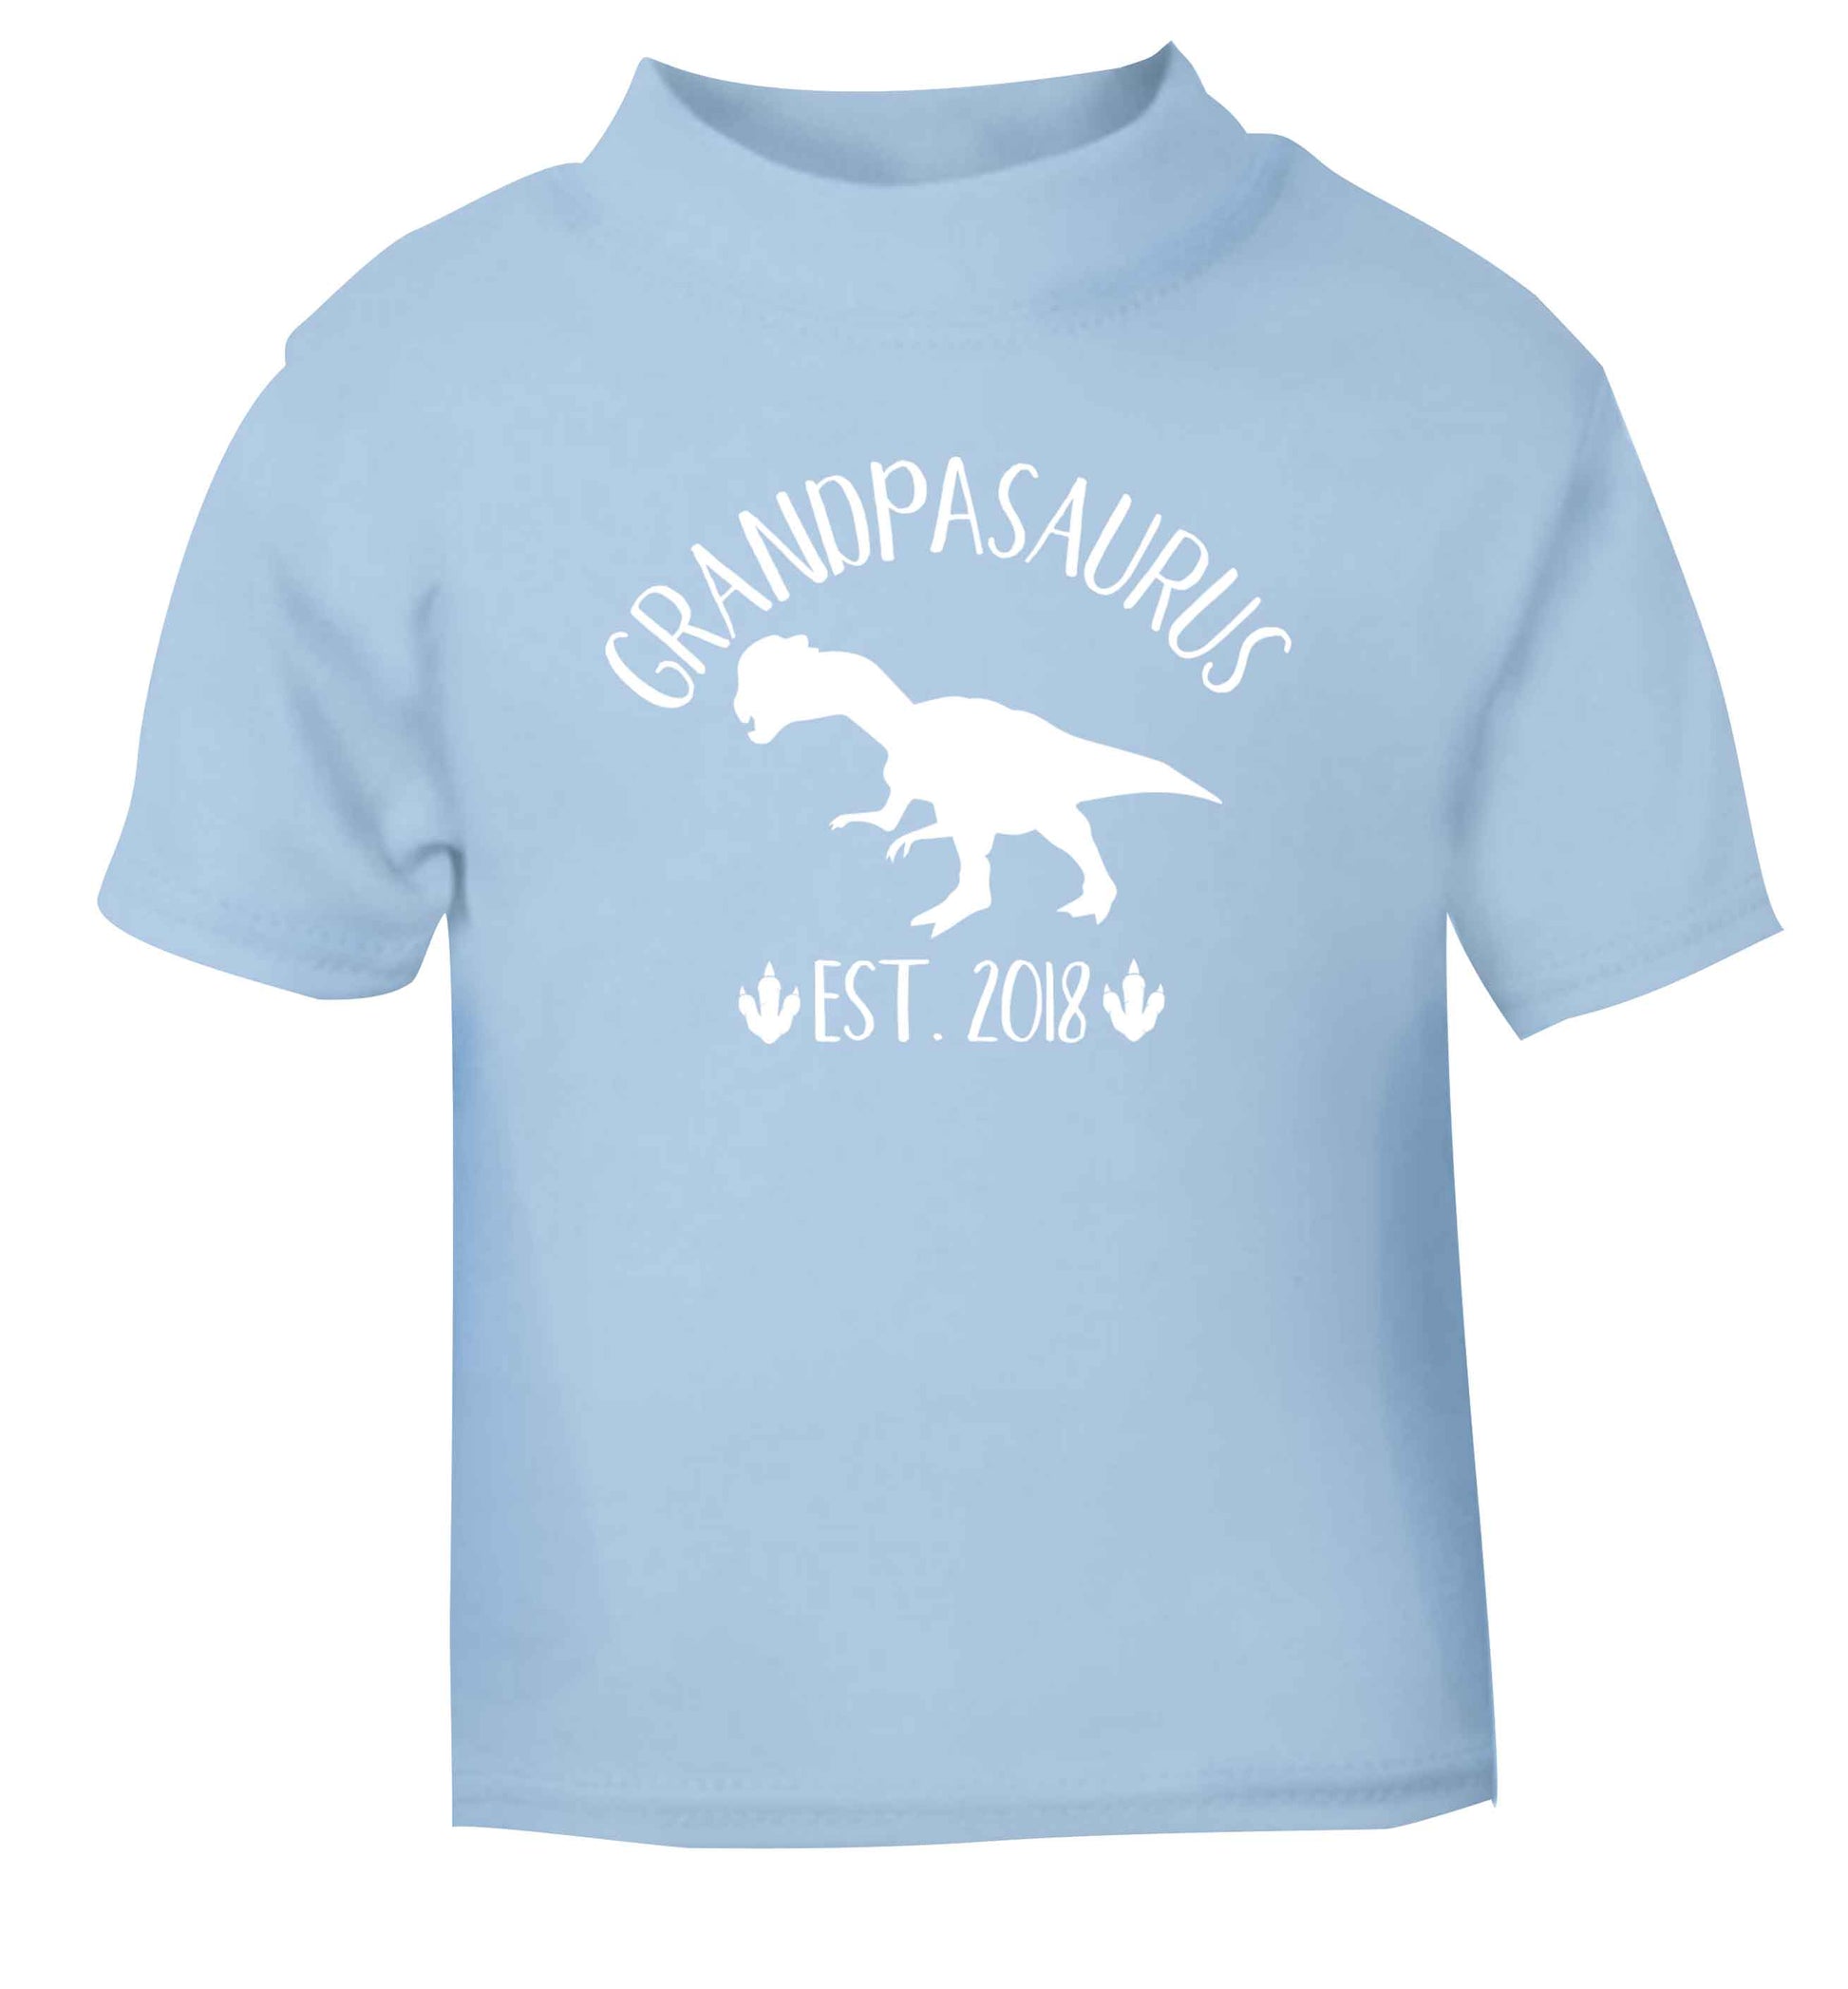 Personalised grandpasaurus since (custom date) light blue Baby Toddler Tshirt 2 Years